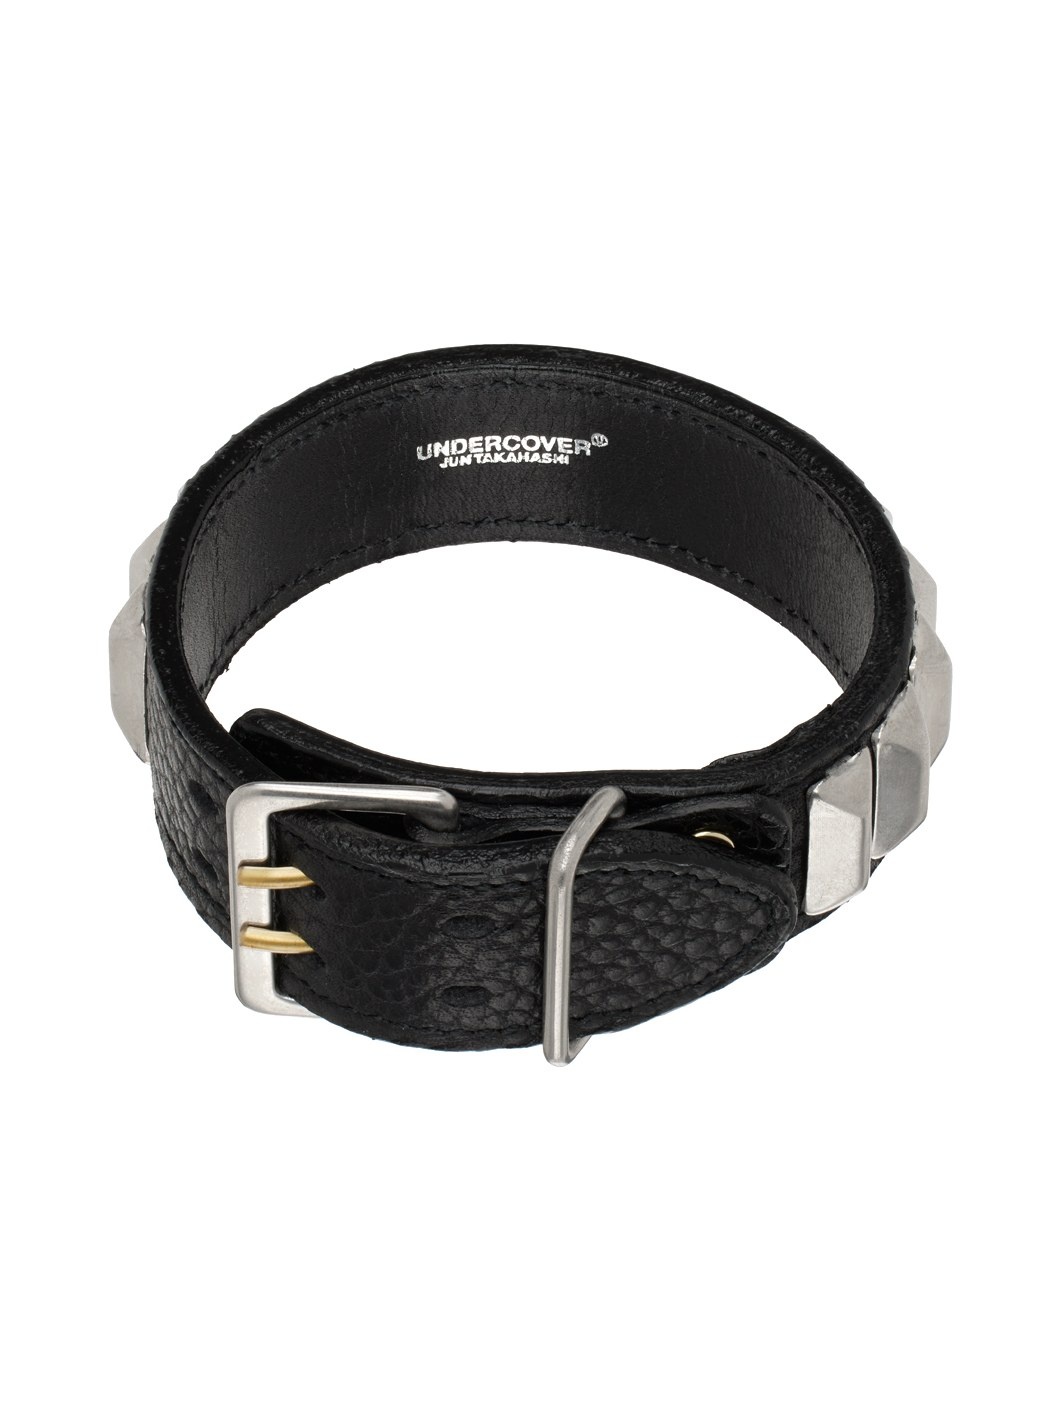 Black & Silver Leather Bracelet - 2